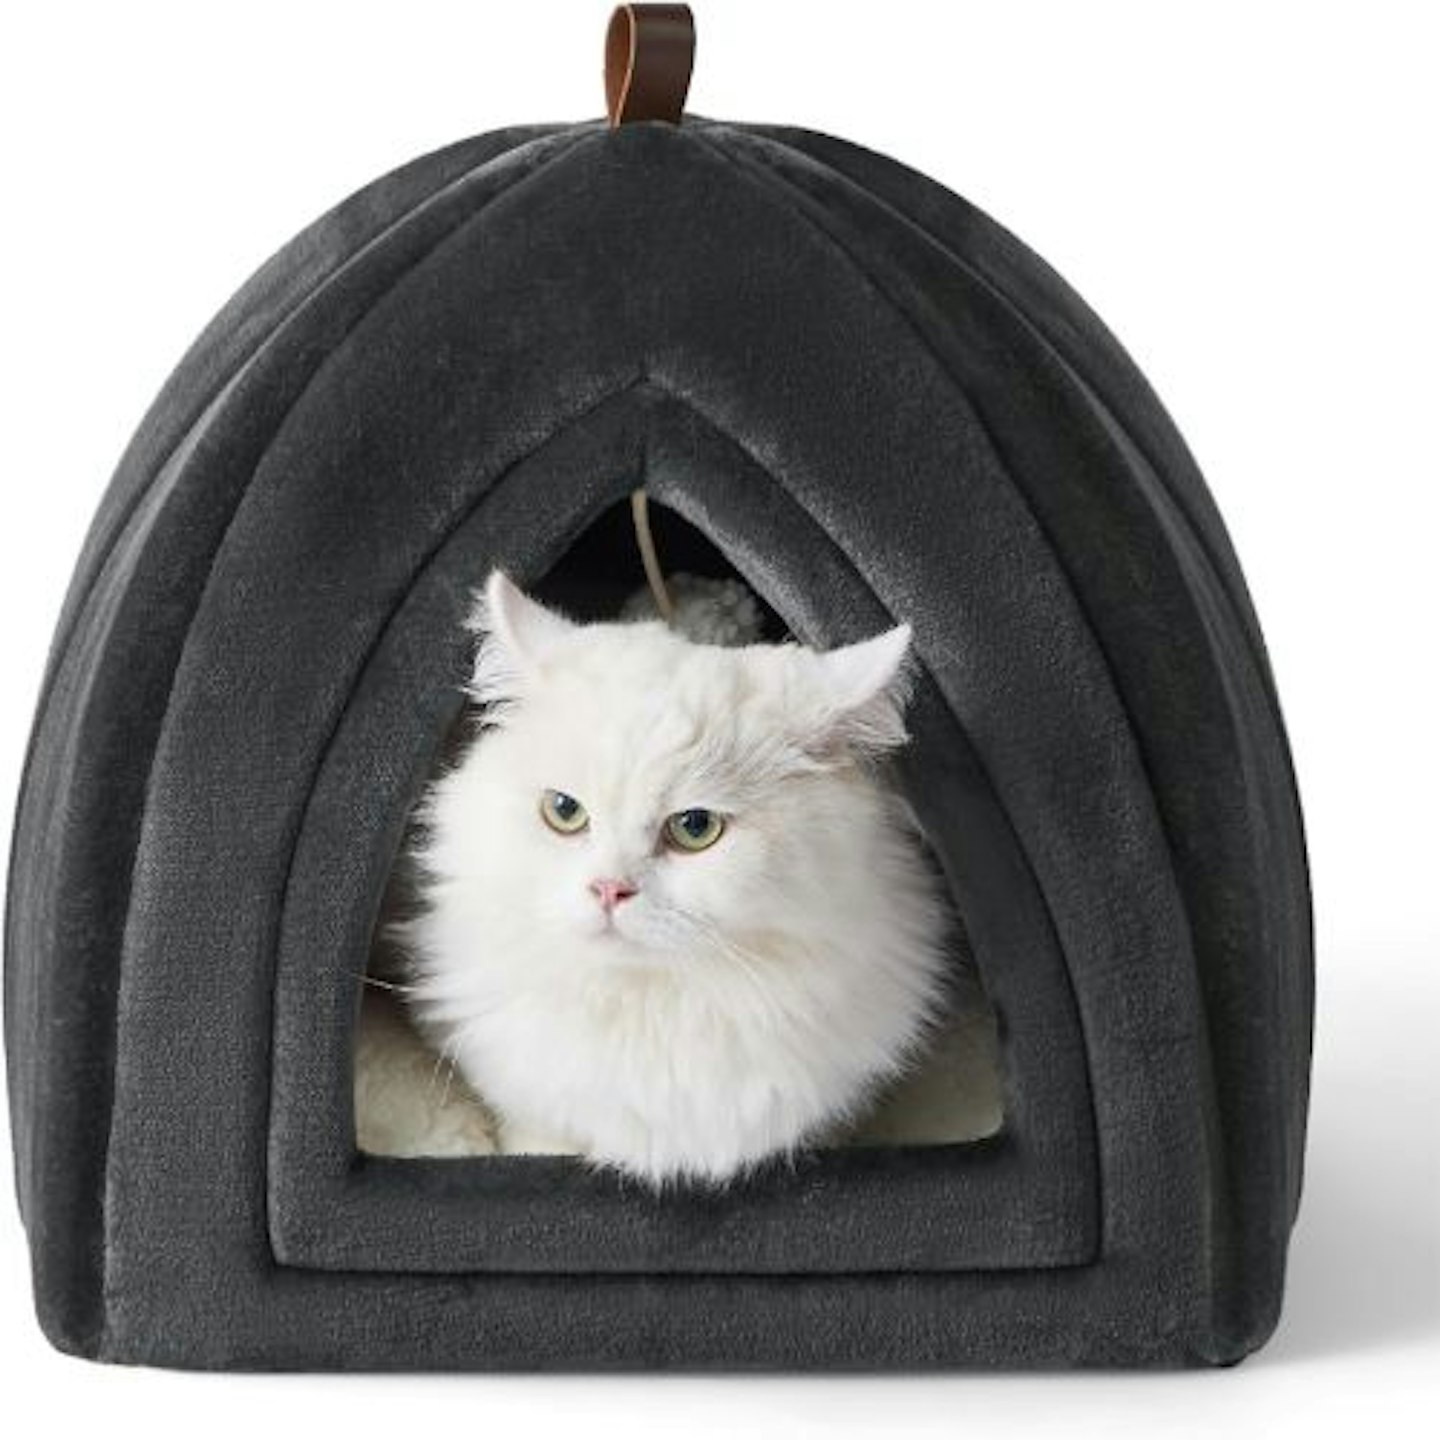 Bedsure cat cave igloo